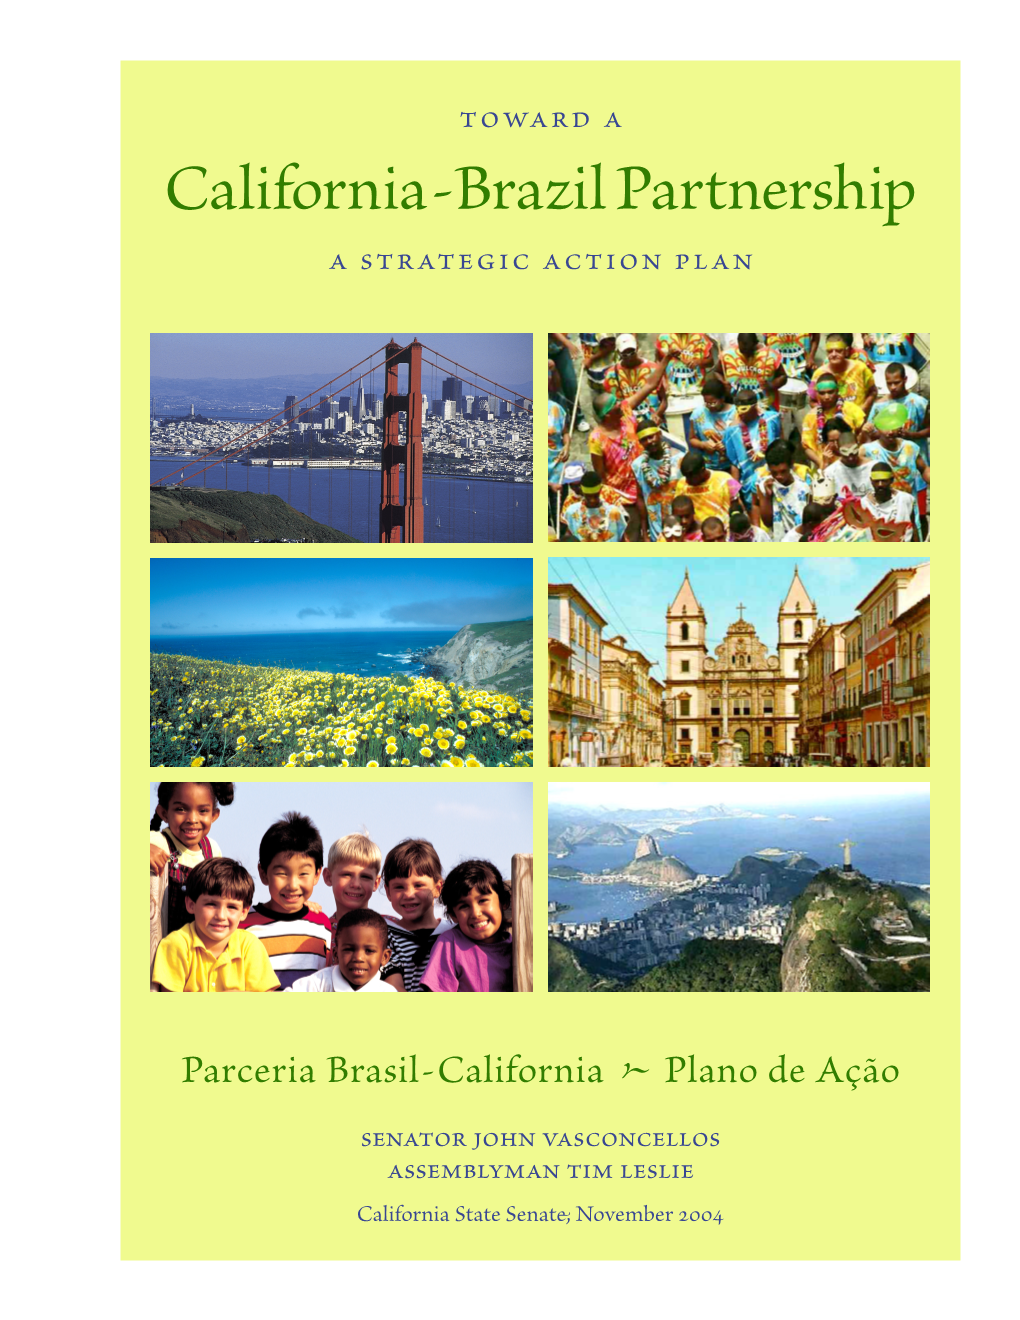 Brazil and California, a Partnership